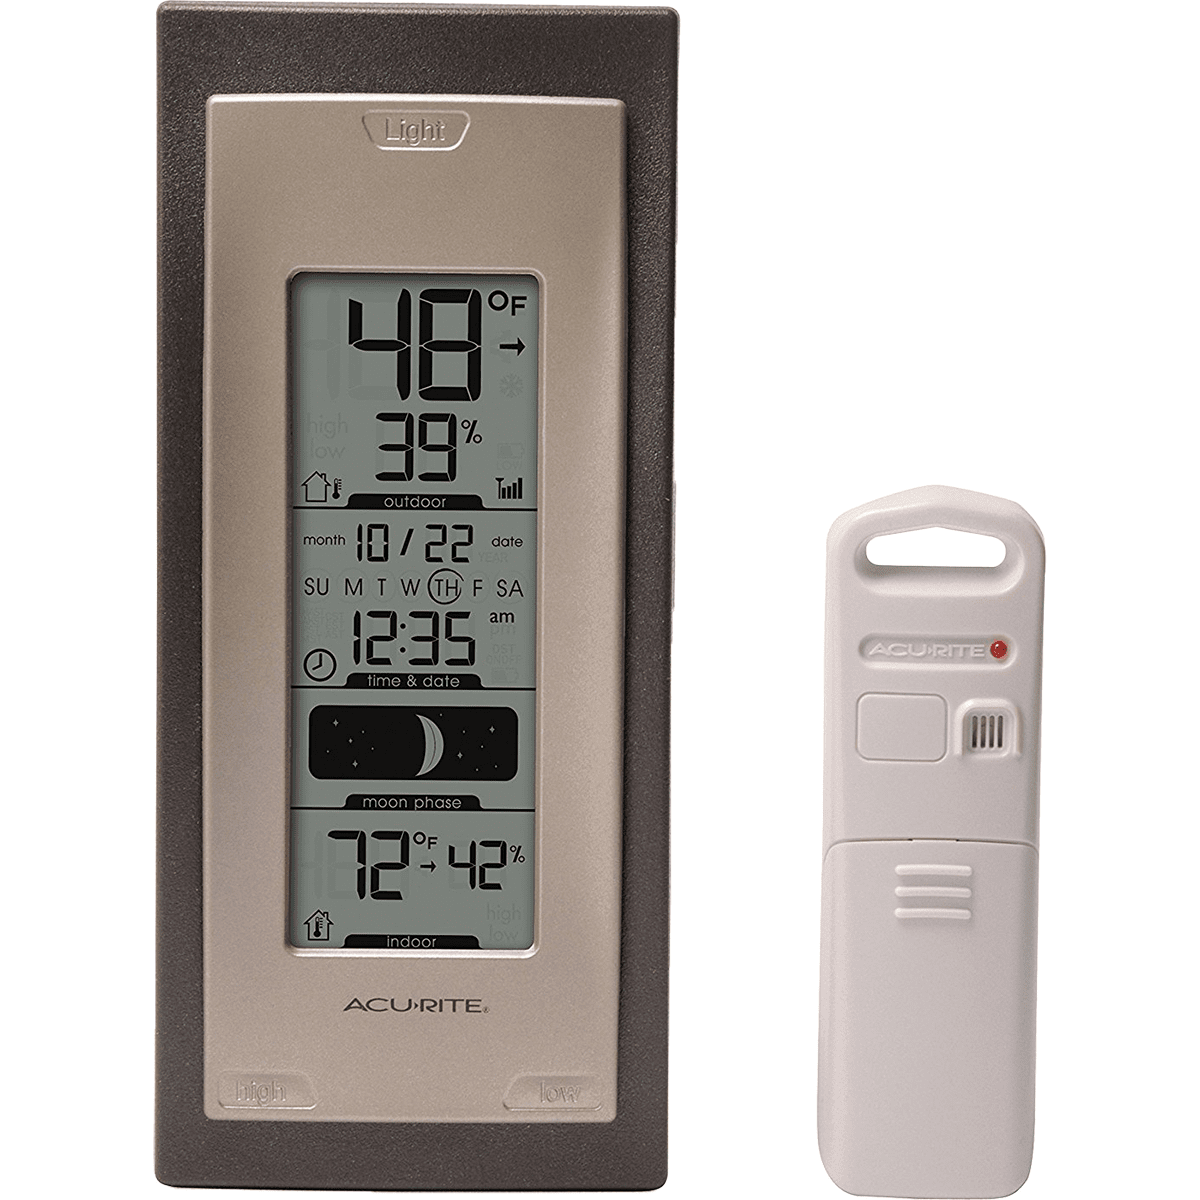 Acu-rite Remote Thermometer / Hygrometer - Digital